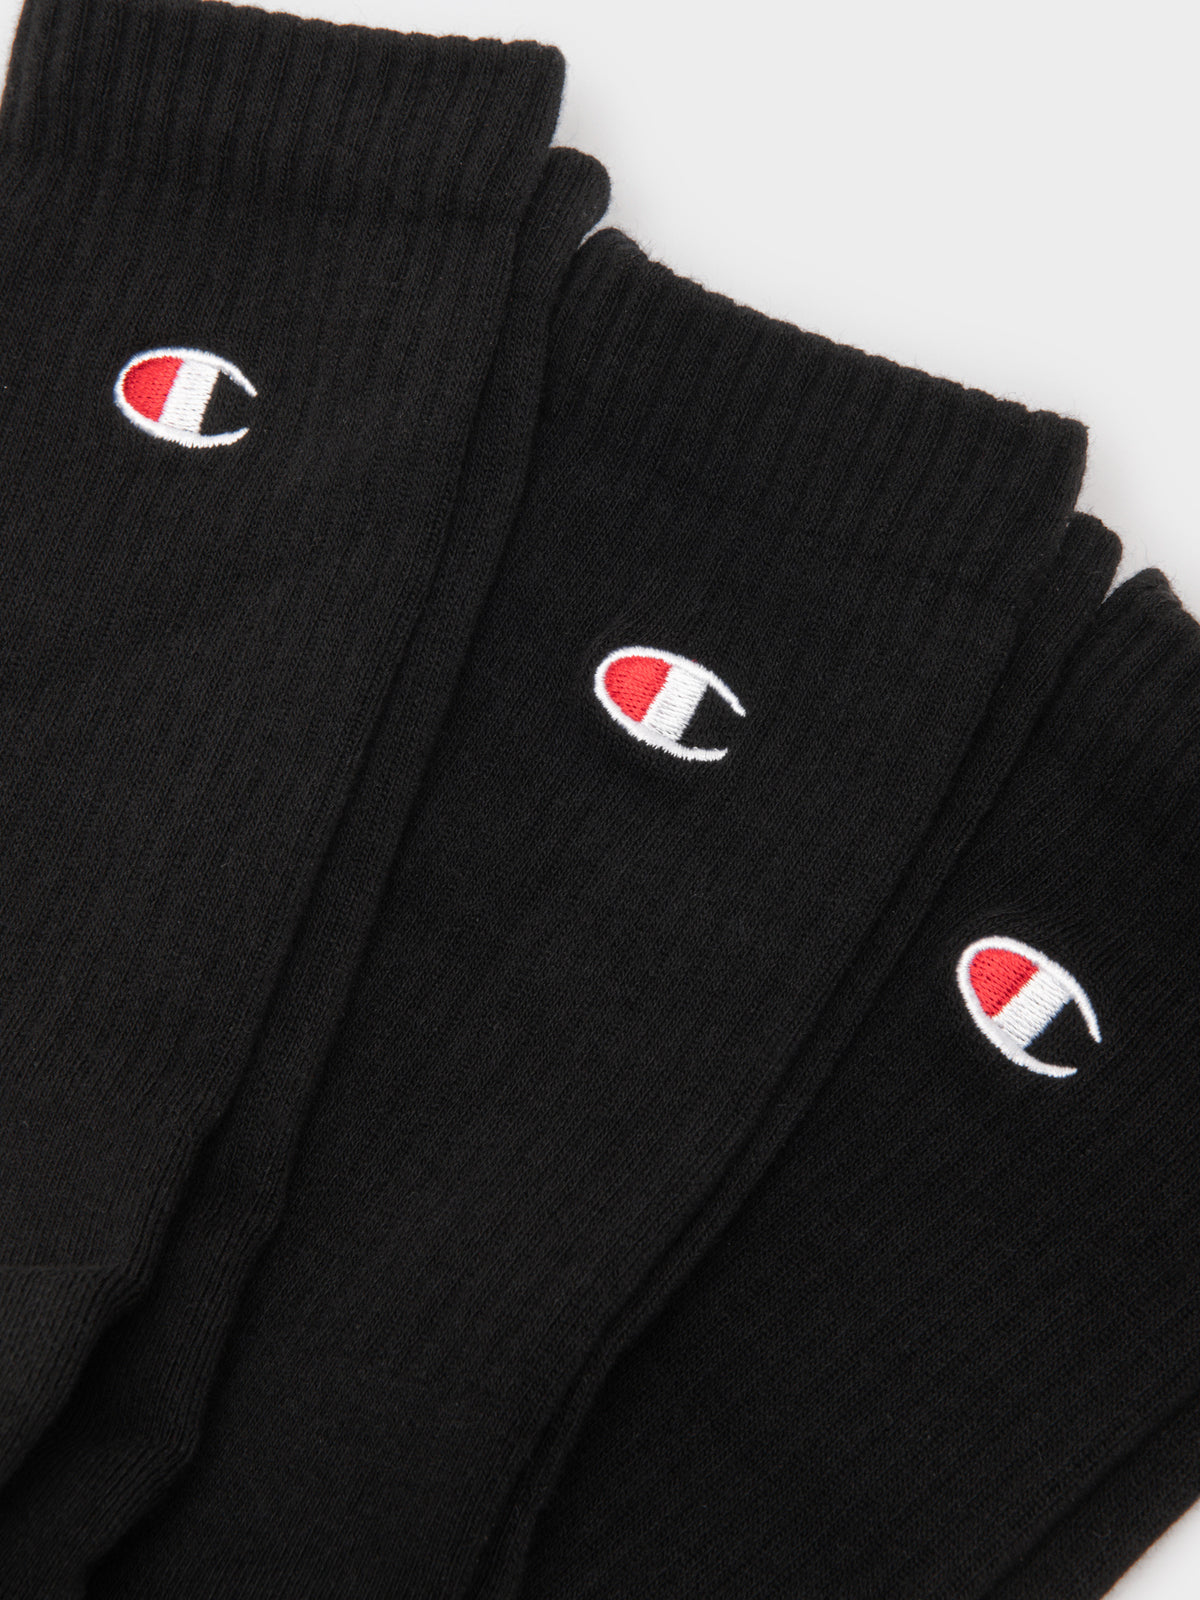 3 Pairs of Lifestyle C Logo Crew Socks in Black